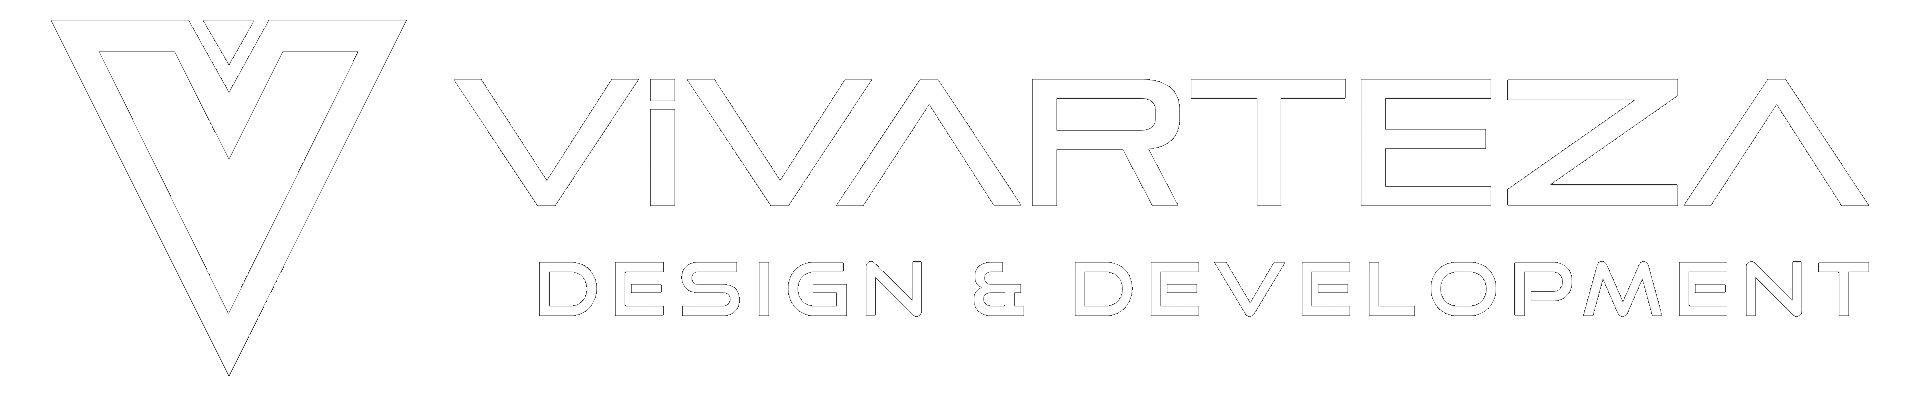 Vivarteza Design Dark Logo